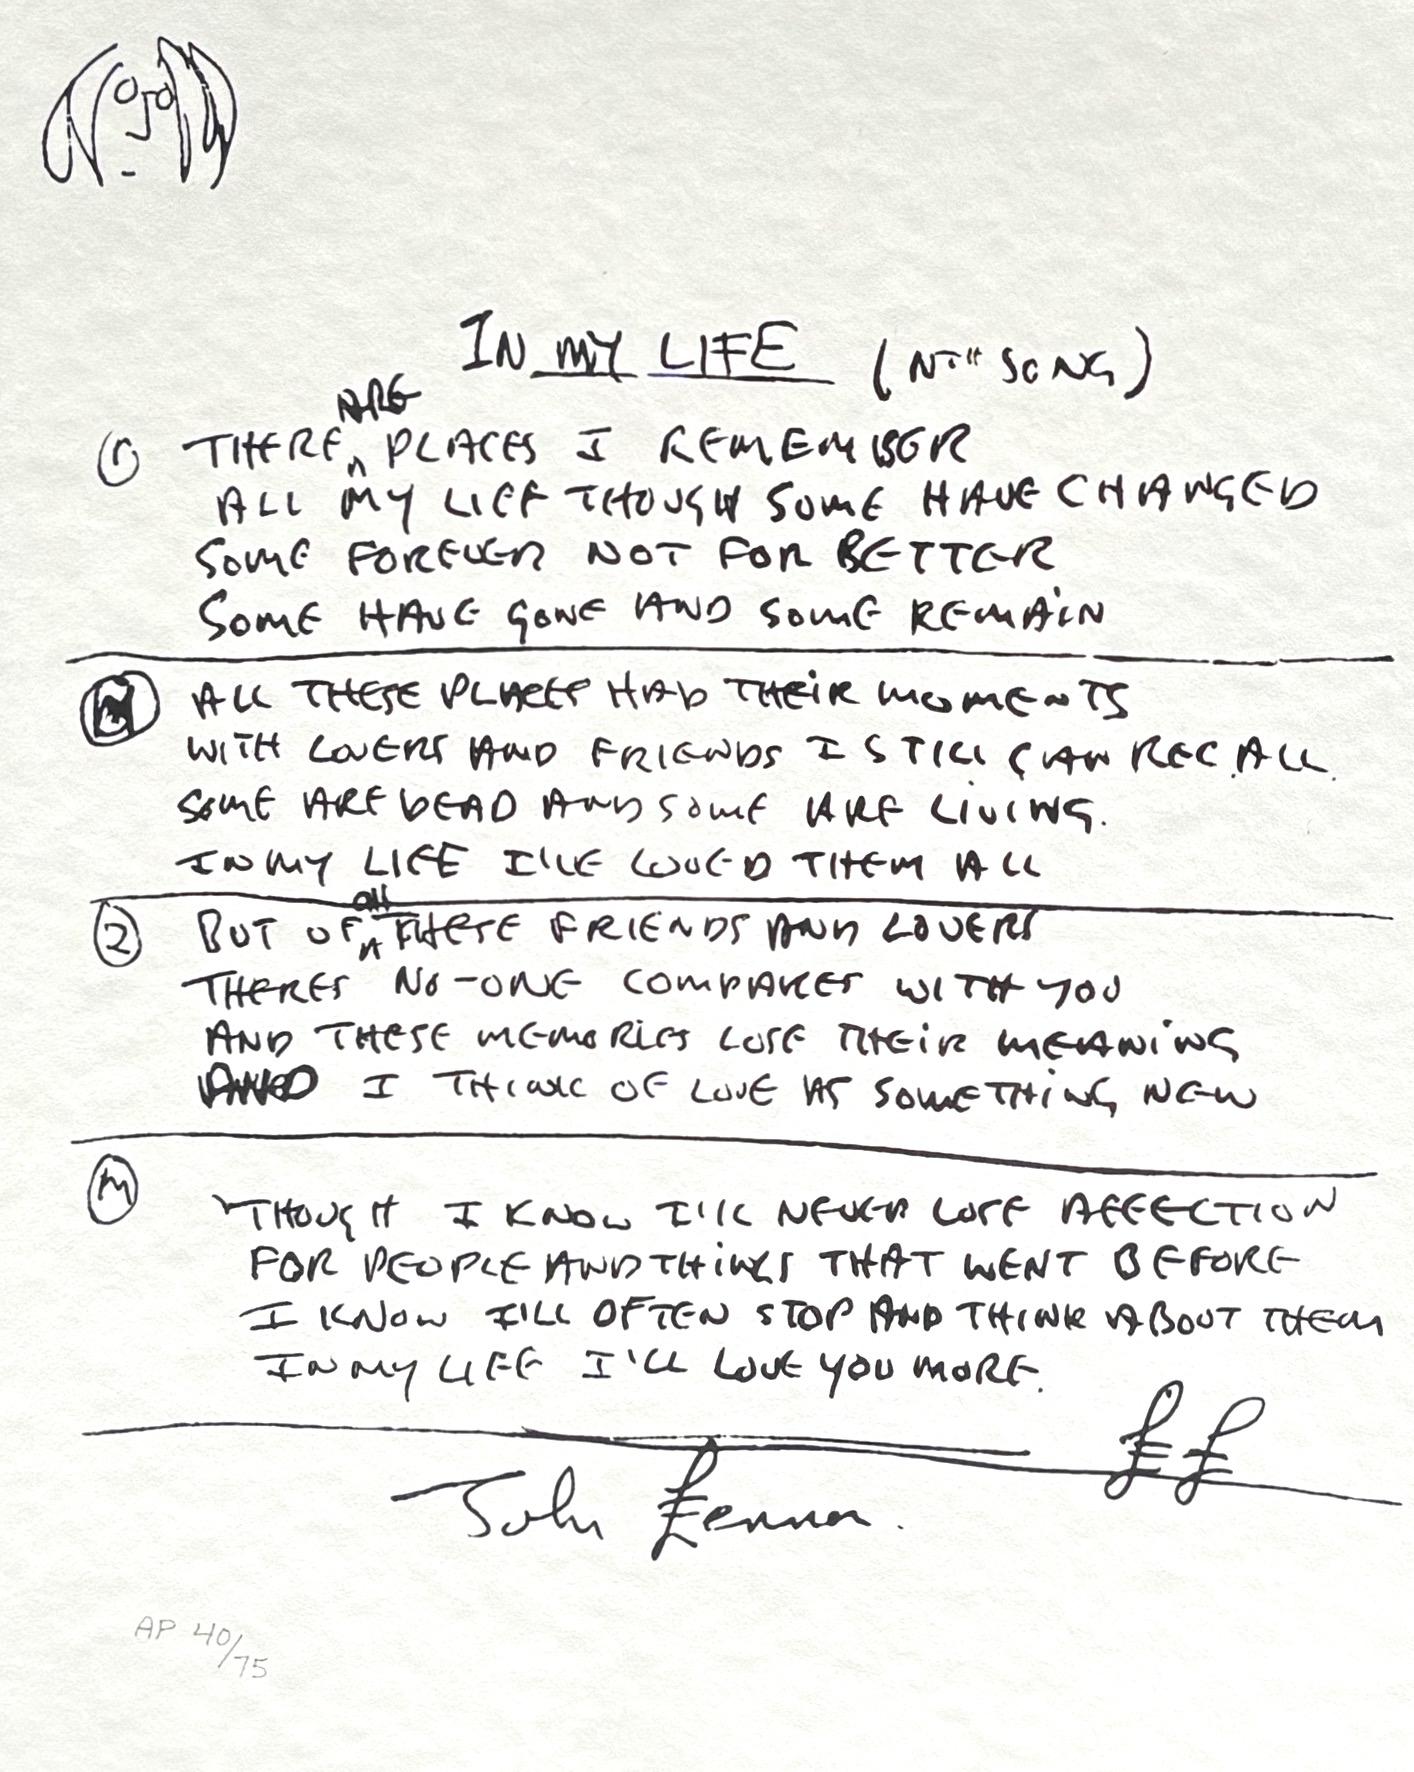 john lennon in my life lyrics